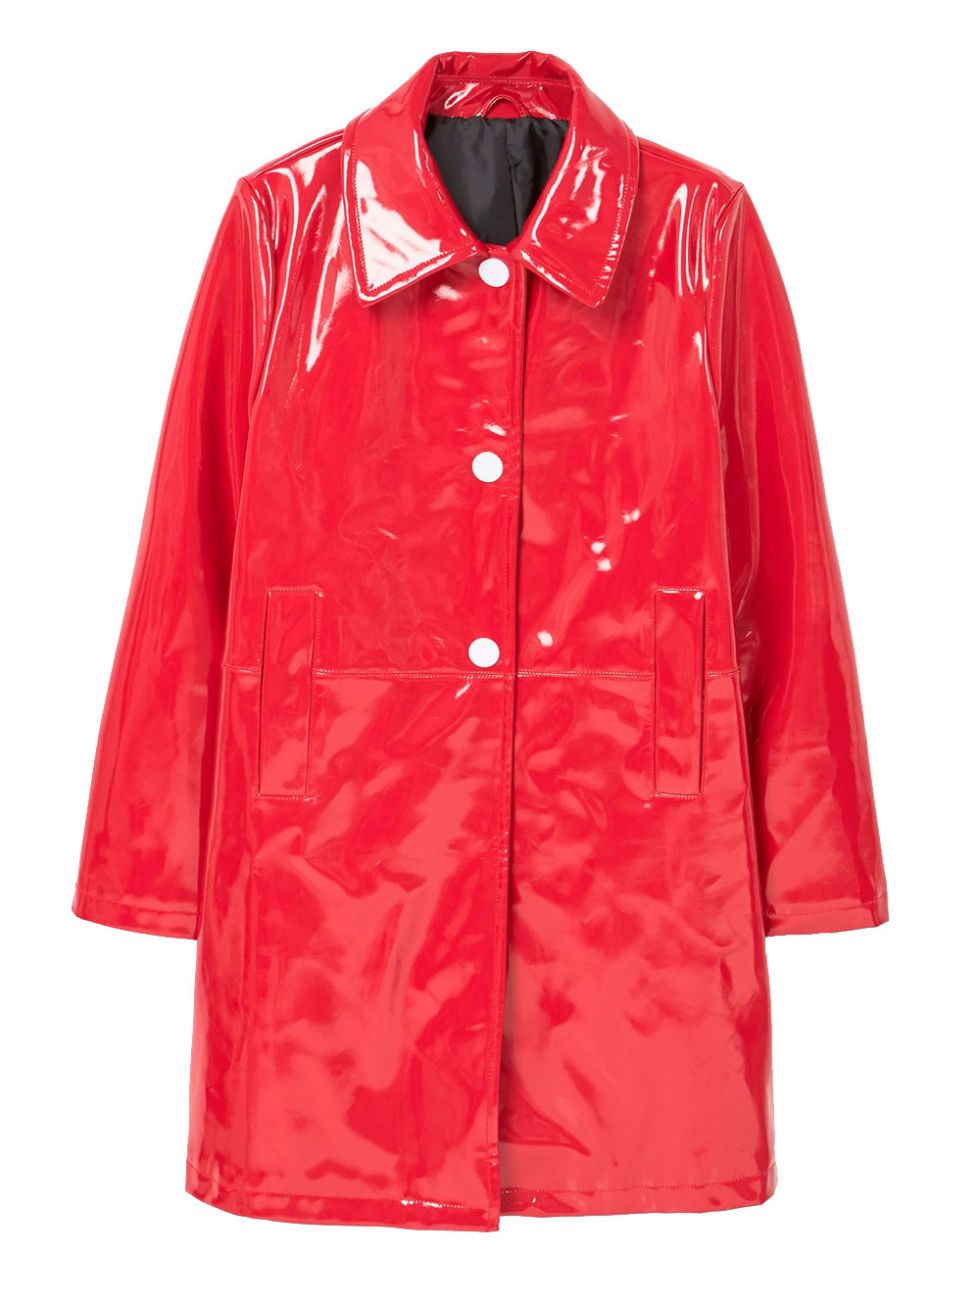 Clothing, Outerwear, Red, Sleeve, Jacket, Raincoat, Coat, Collar, Windbreaker, Rain suit, 